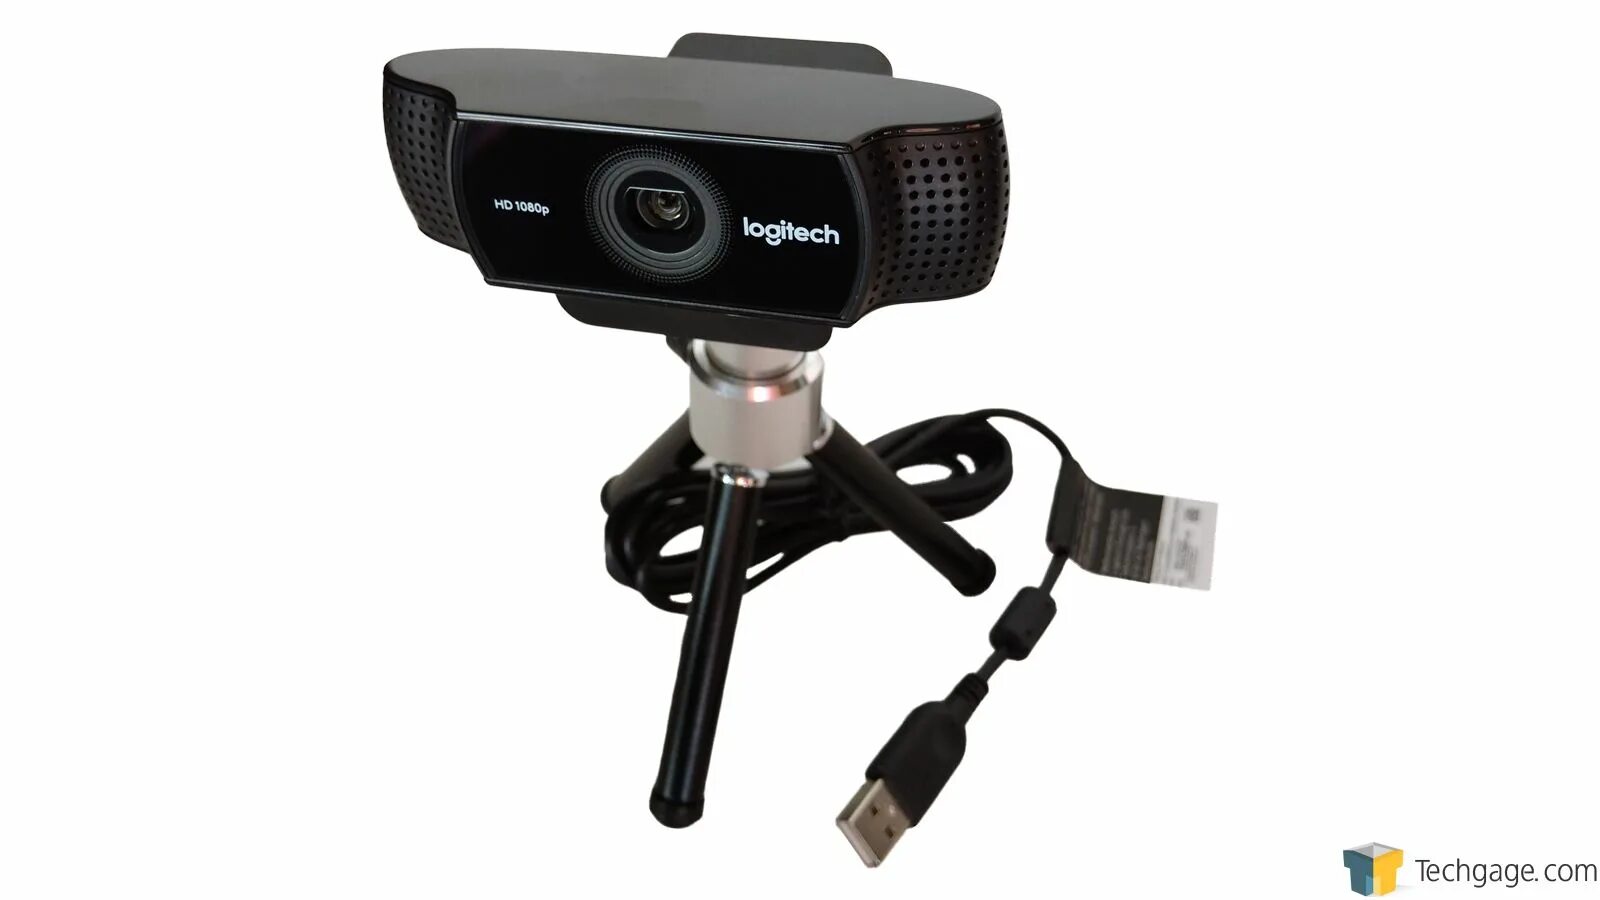 Logitech c922 Pro. Logitech c922 штатив. C922 Pro Stream webcam.